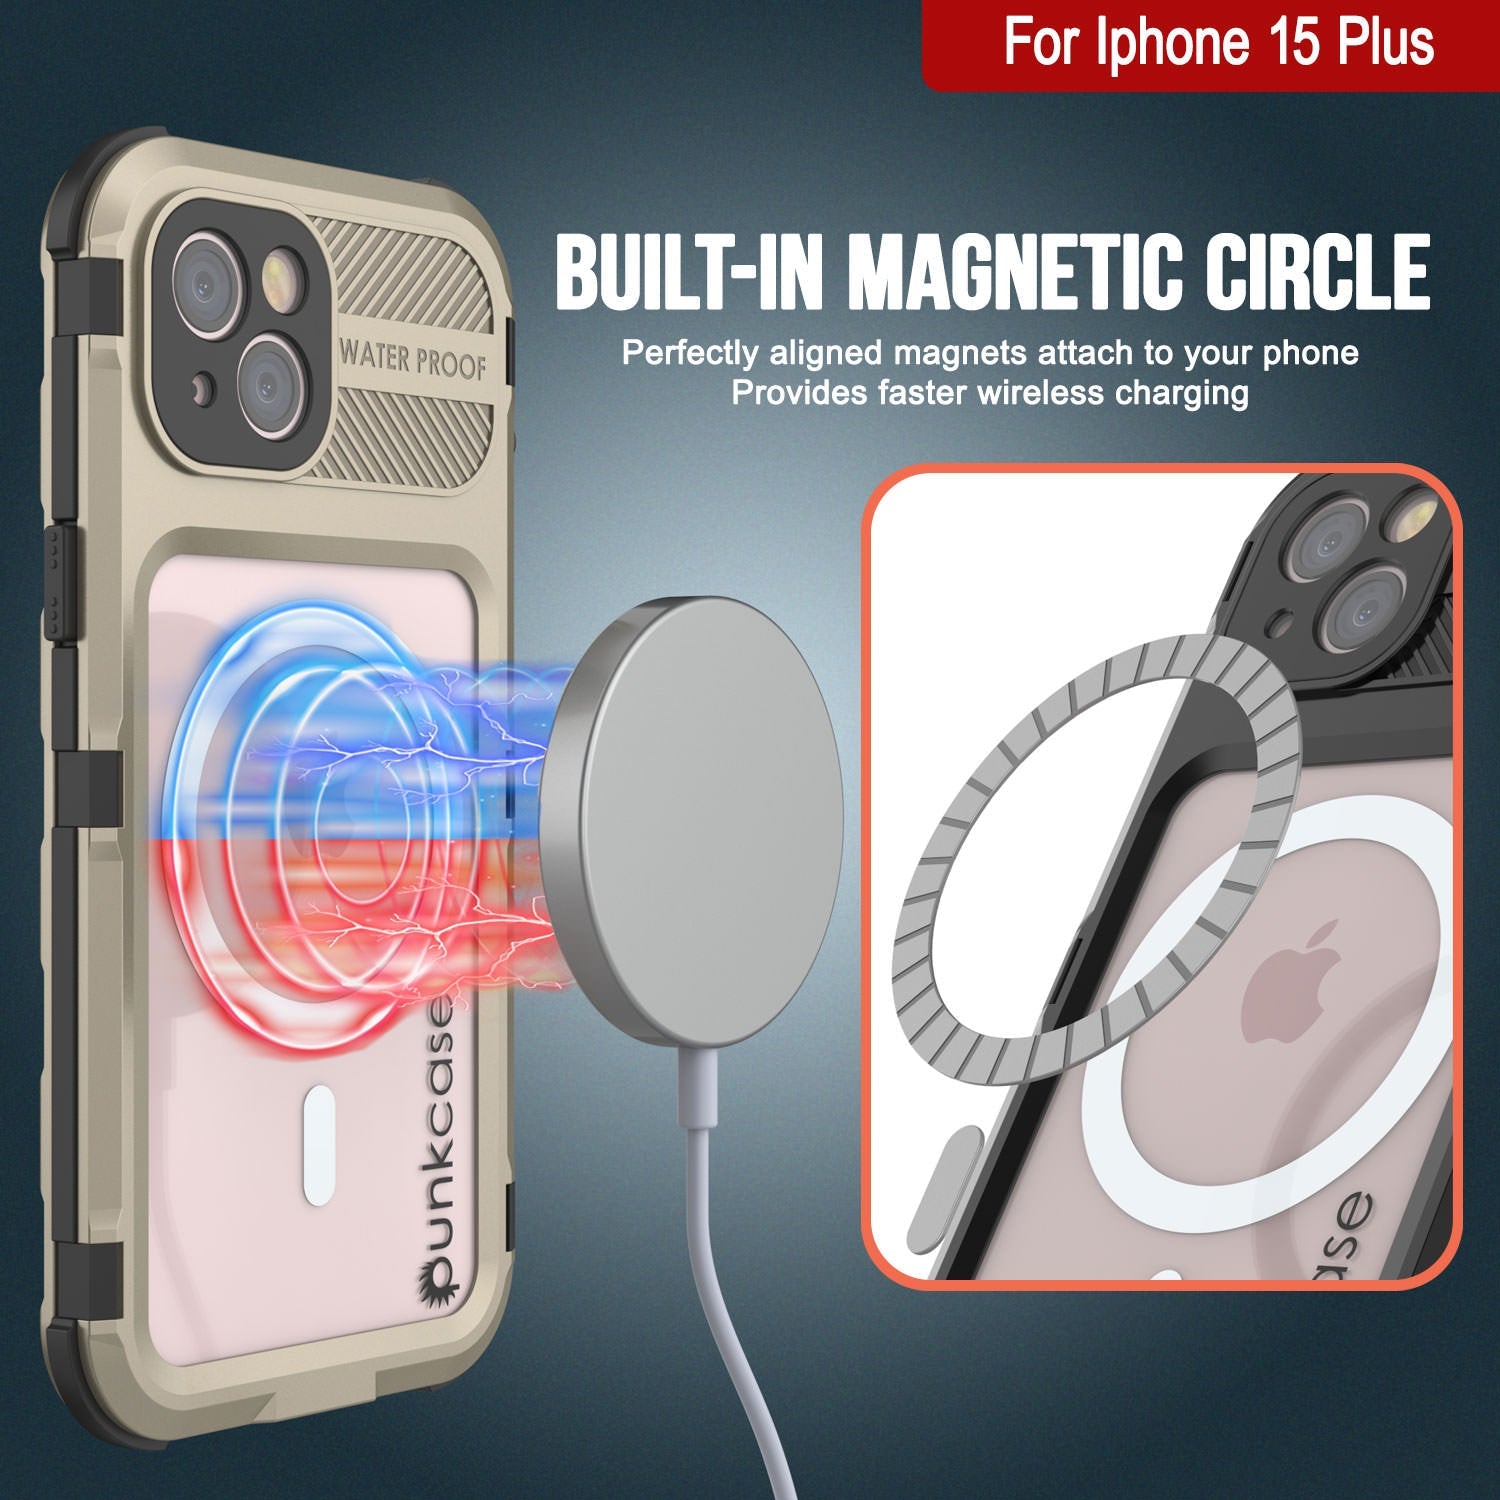 iPhone 15 Plus Metal Extreme 2.0 Series Aluminum Waterproof Case IP68 W/Buillt in Screen Protector [Gold]